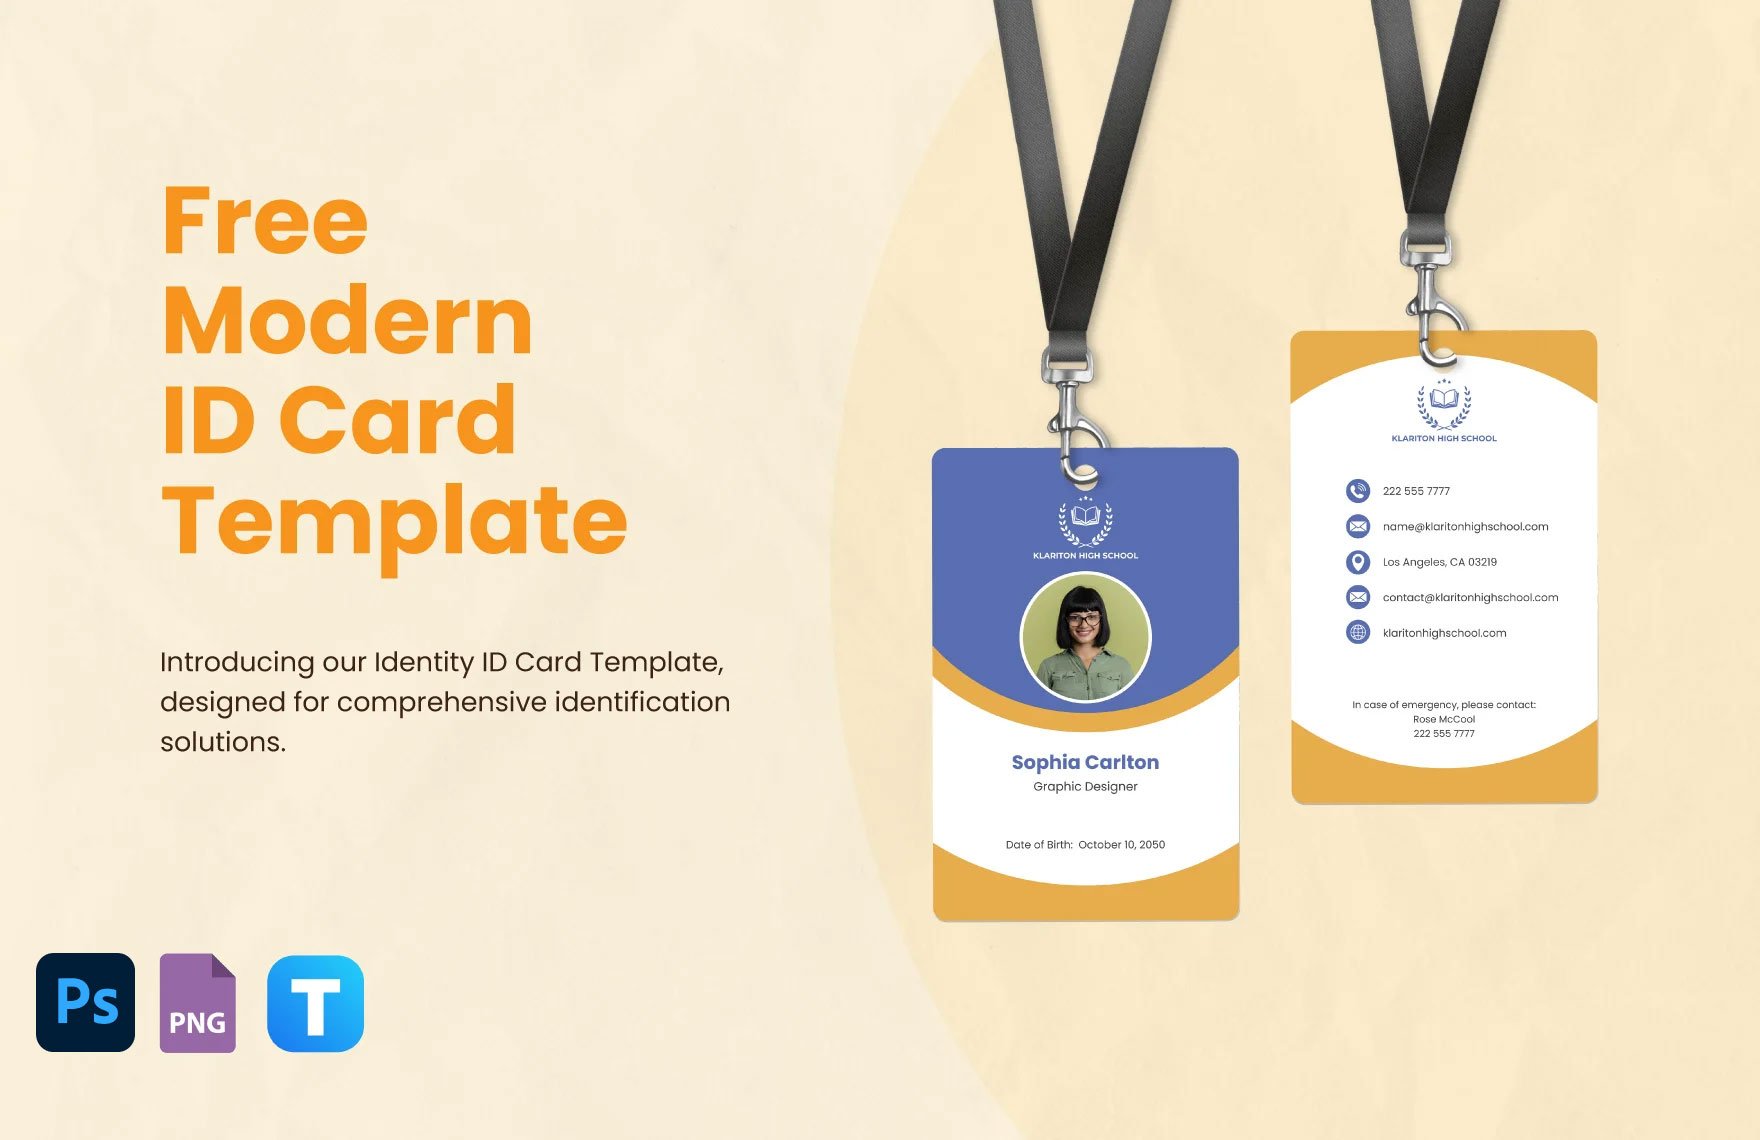 Free Modern ID Card Template